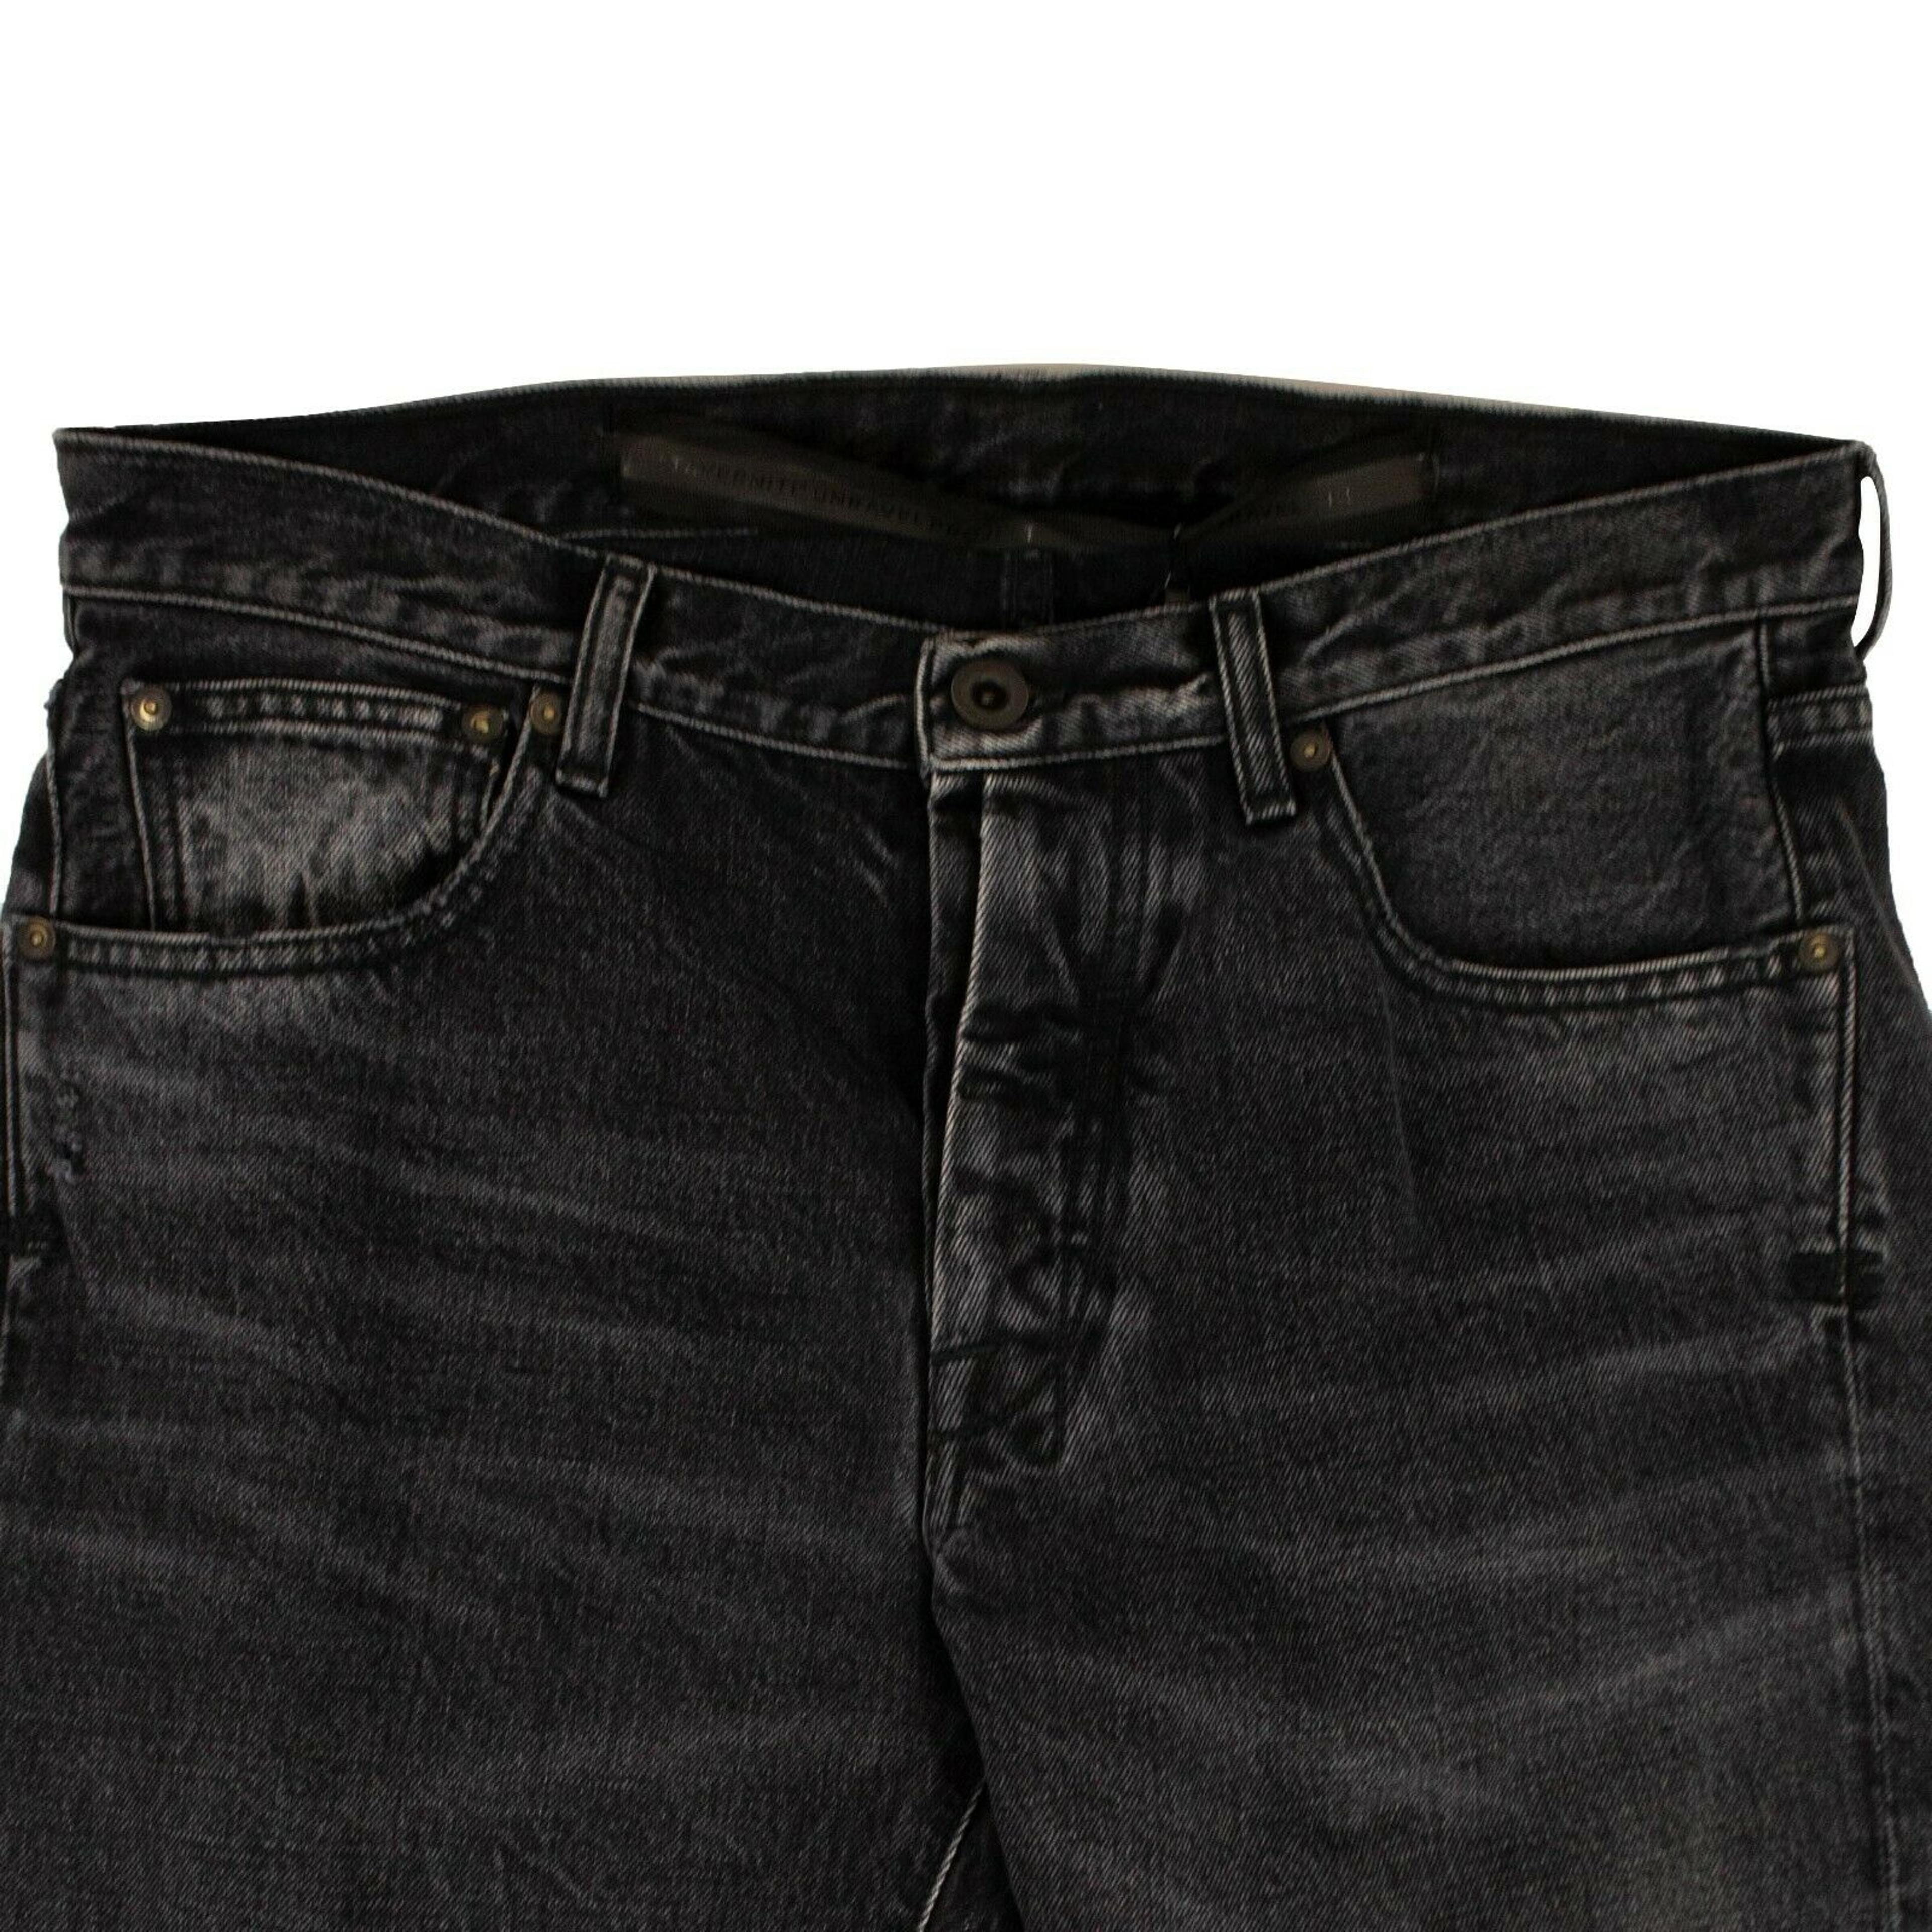 Alternate View 2 of Men's Black Mid Rise Skinny Jeans